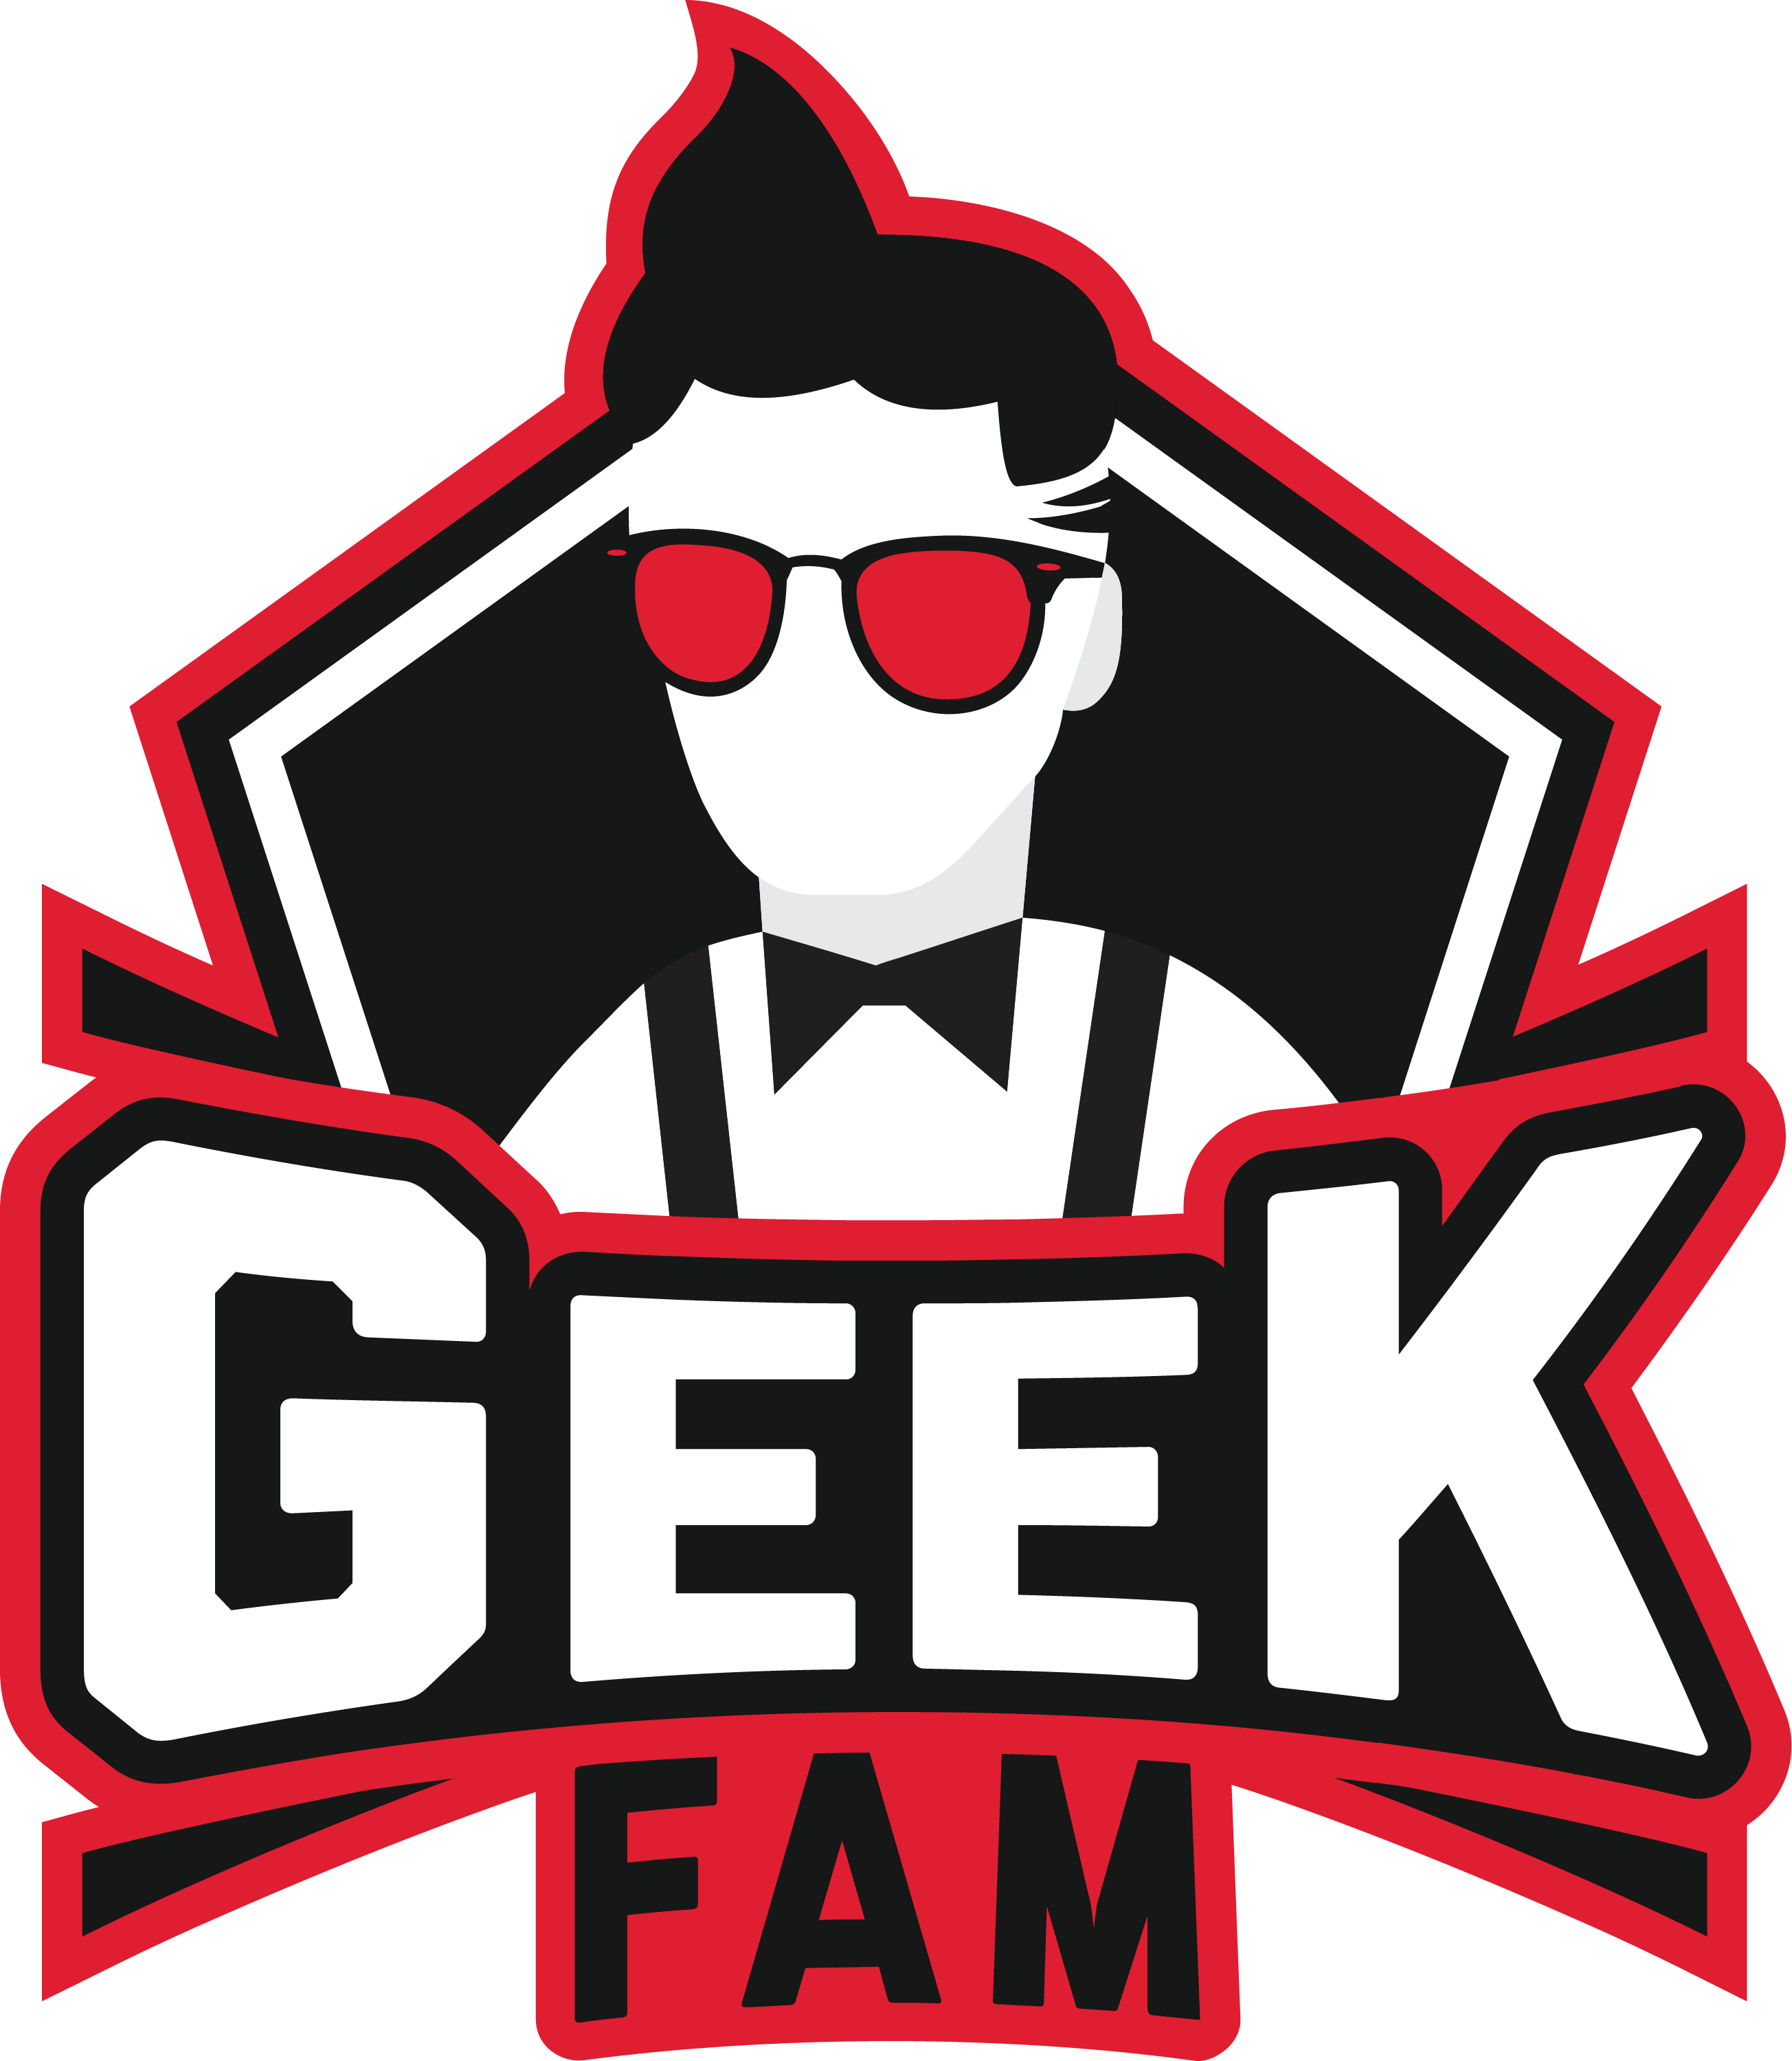 Geek Fam 2019.png